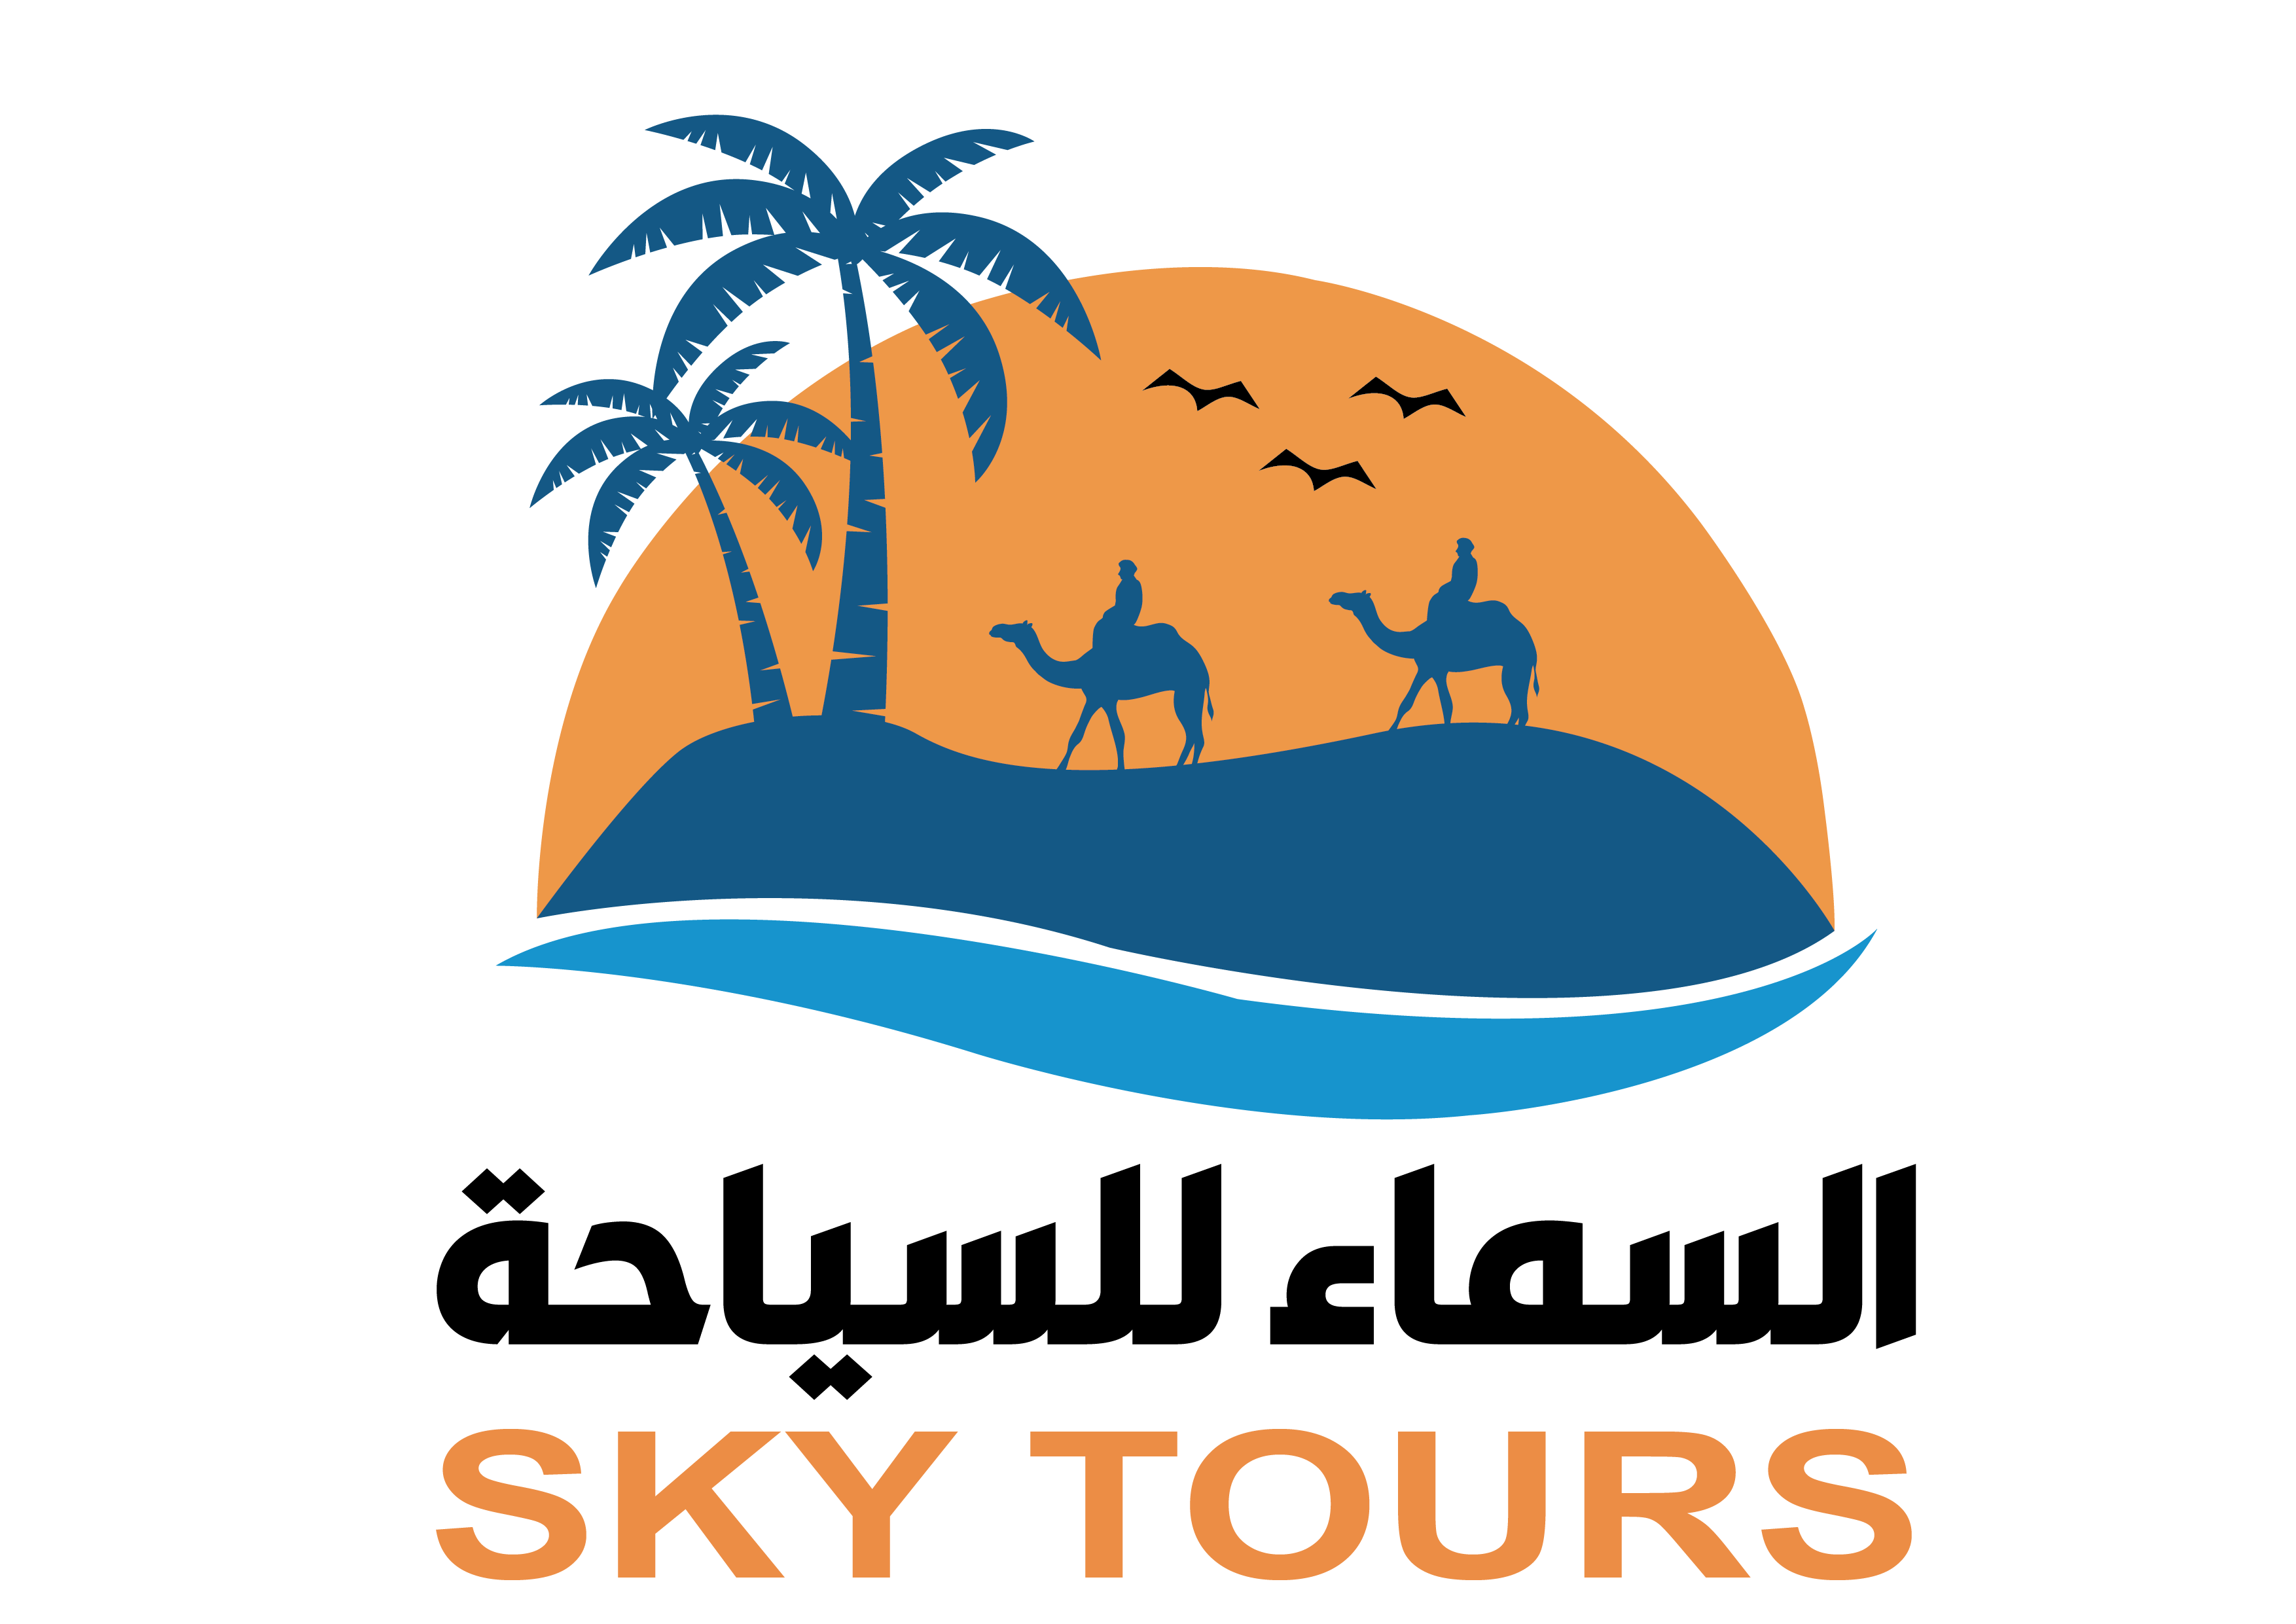 Sky Tours